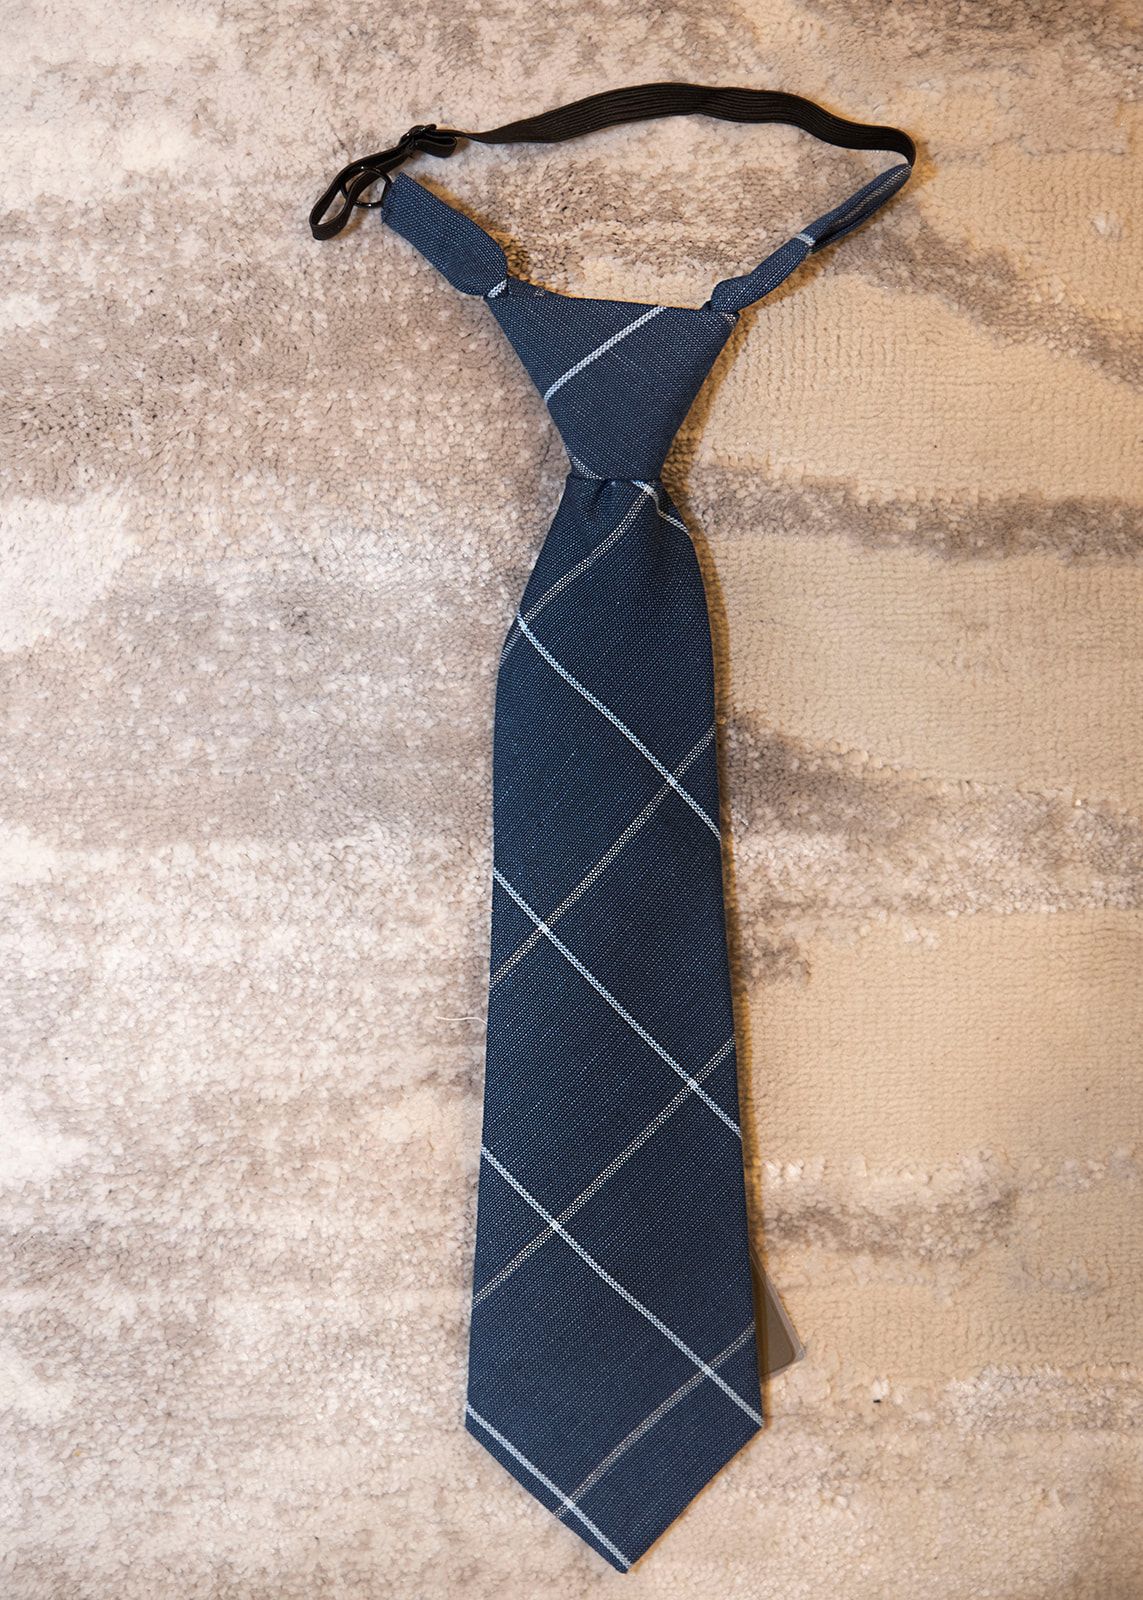 Corbata azul rayas blancas